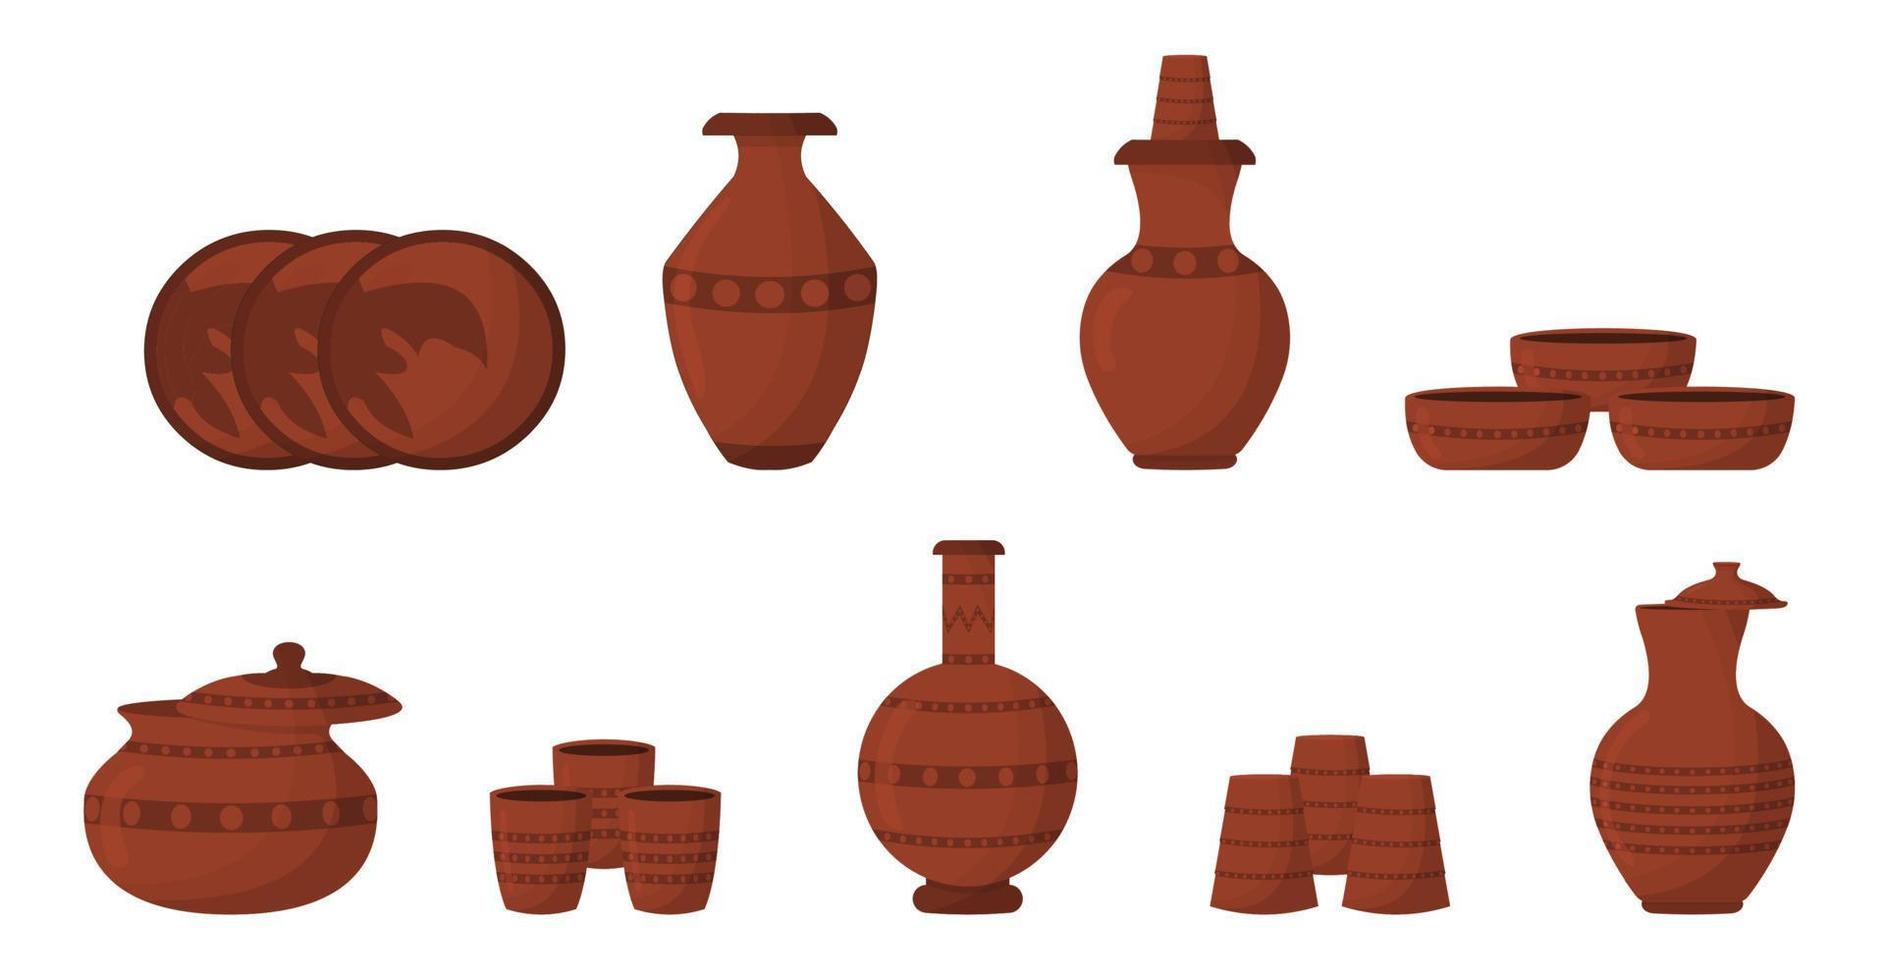 conjunto do argila potes, jarra, jarro, vidro, ânfora vetor ilustração do antigo argila tradicional vaso isolado em branco fundo.